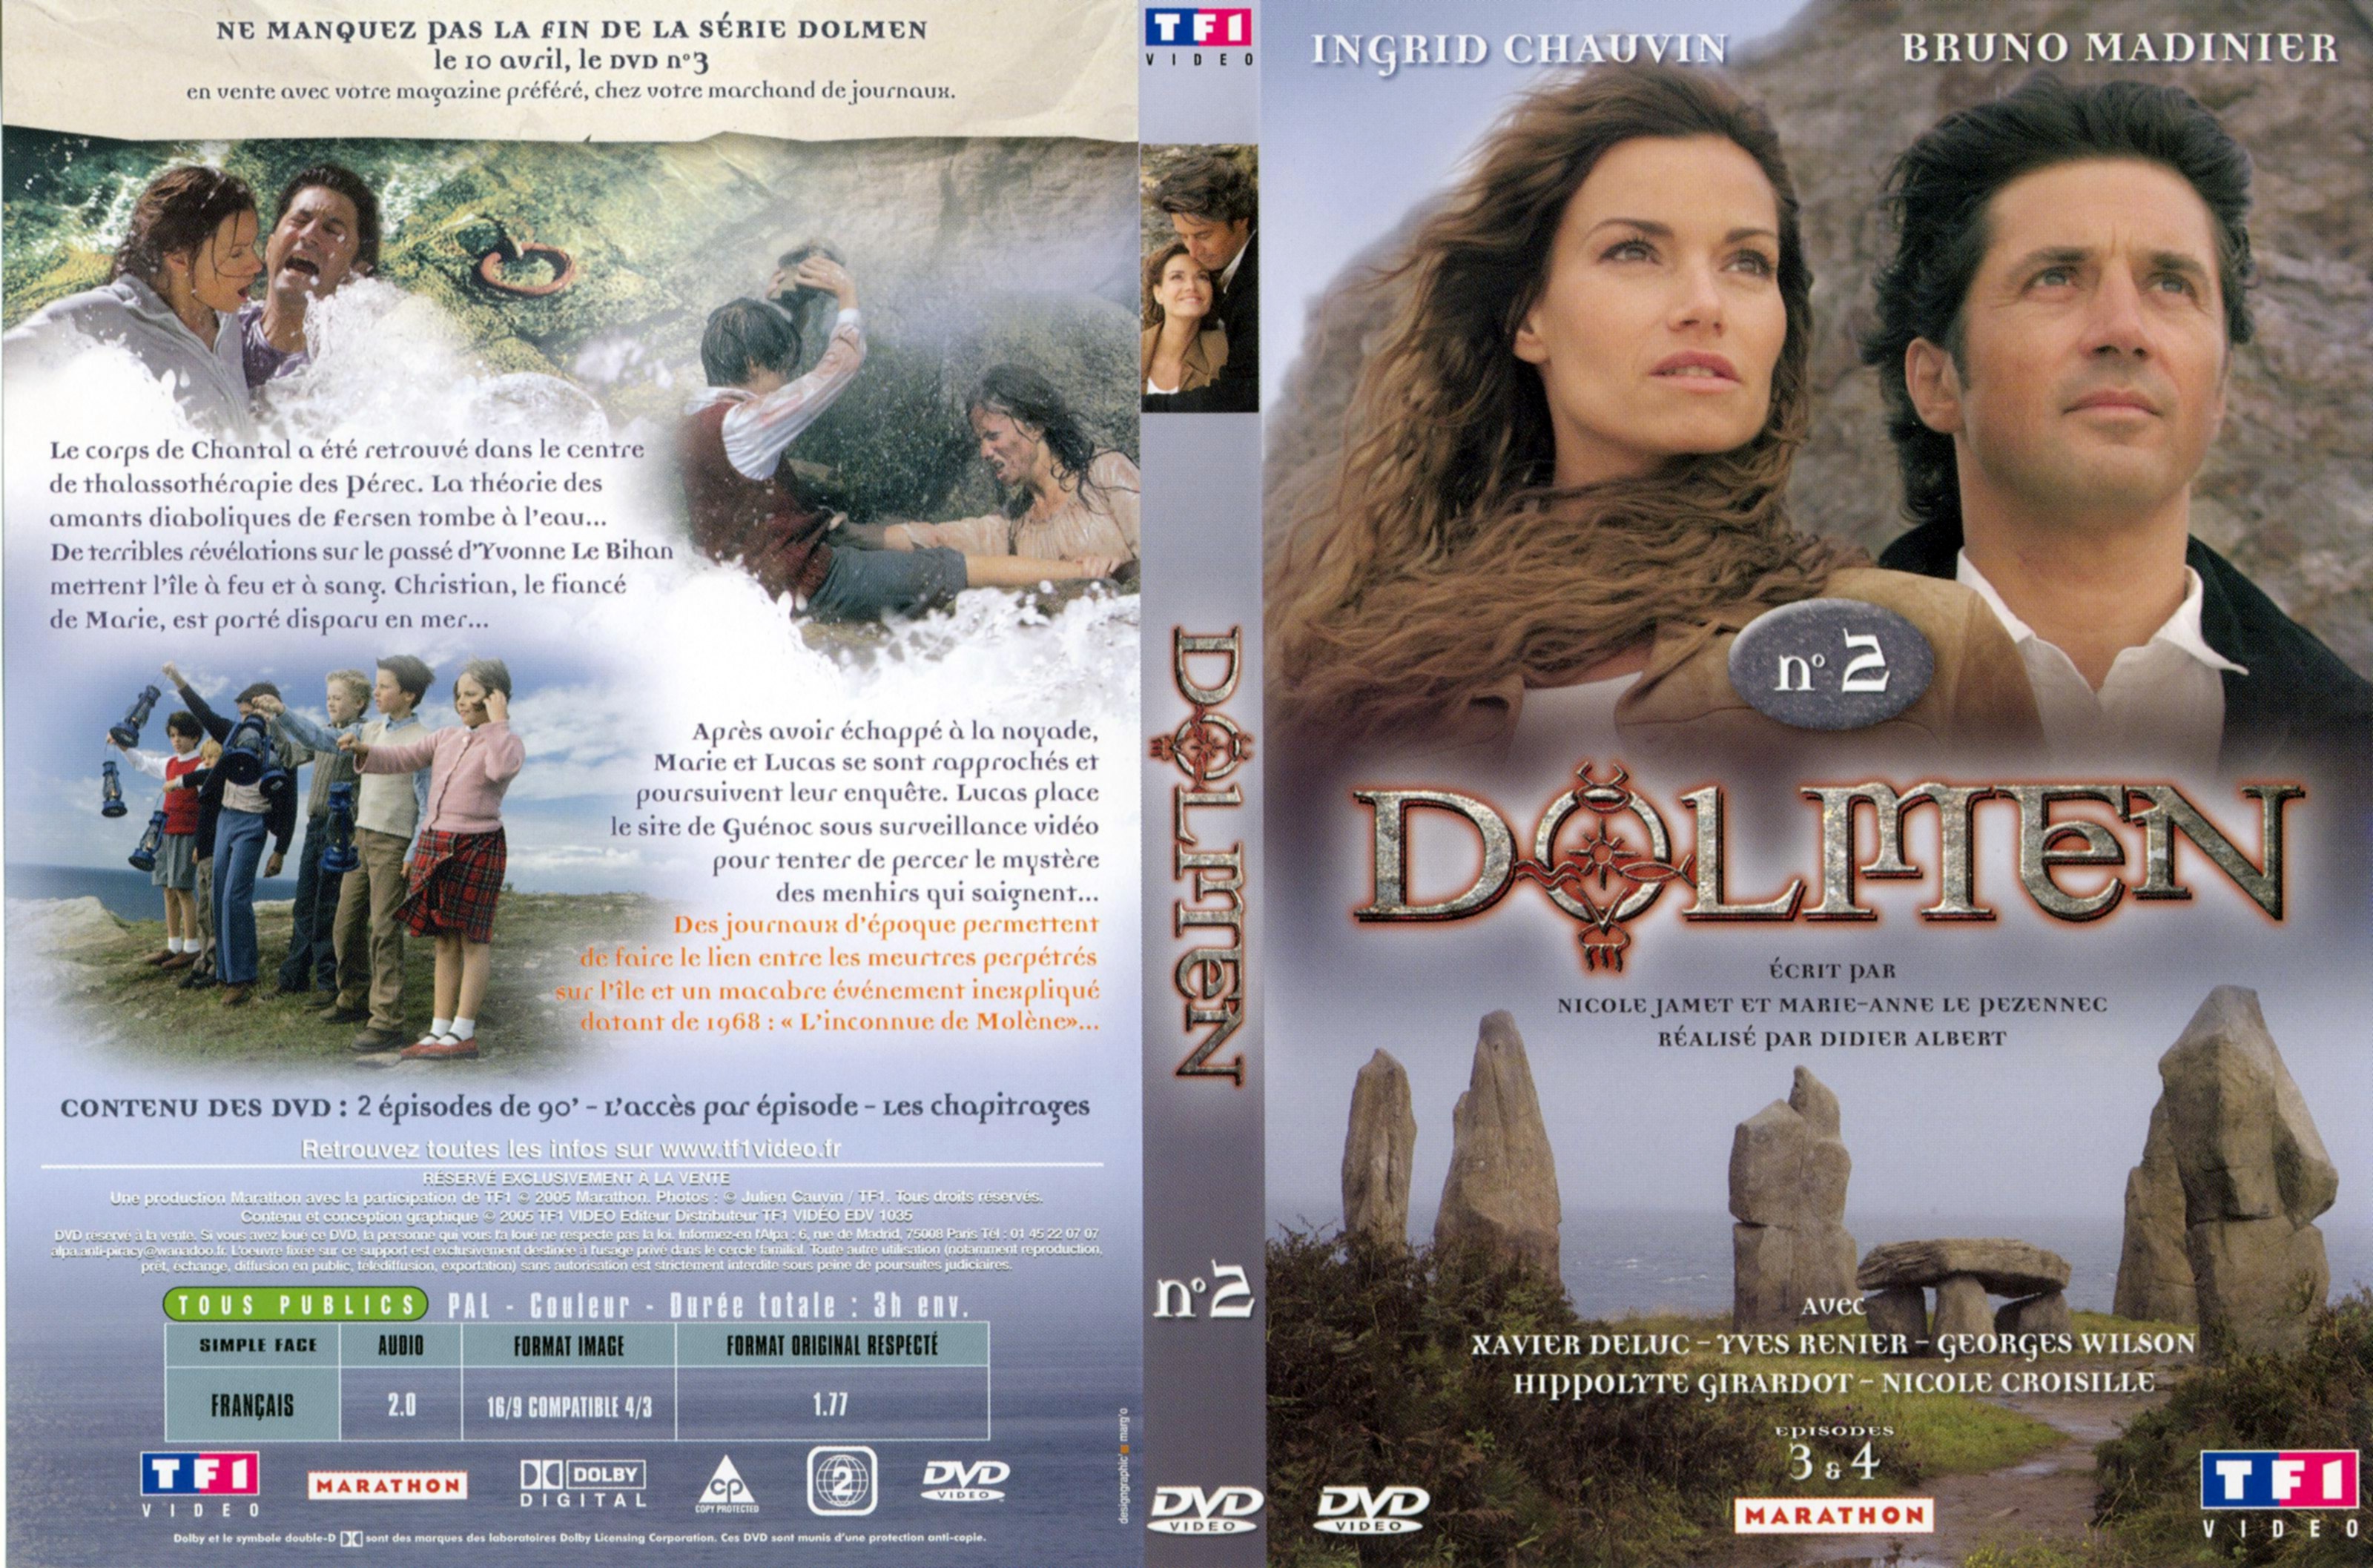 Jaquette DVD Dolmen vol 2